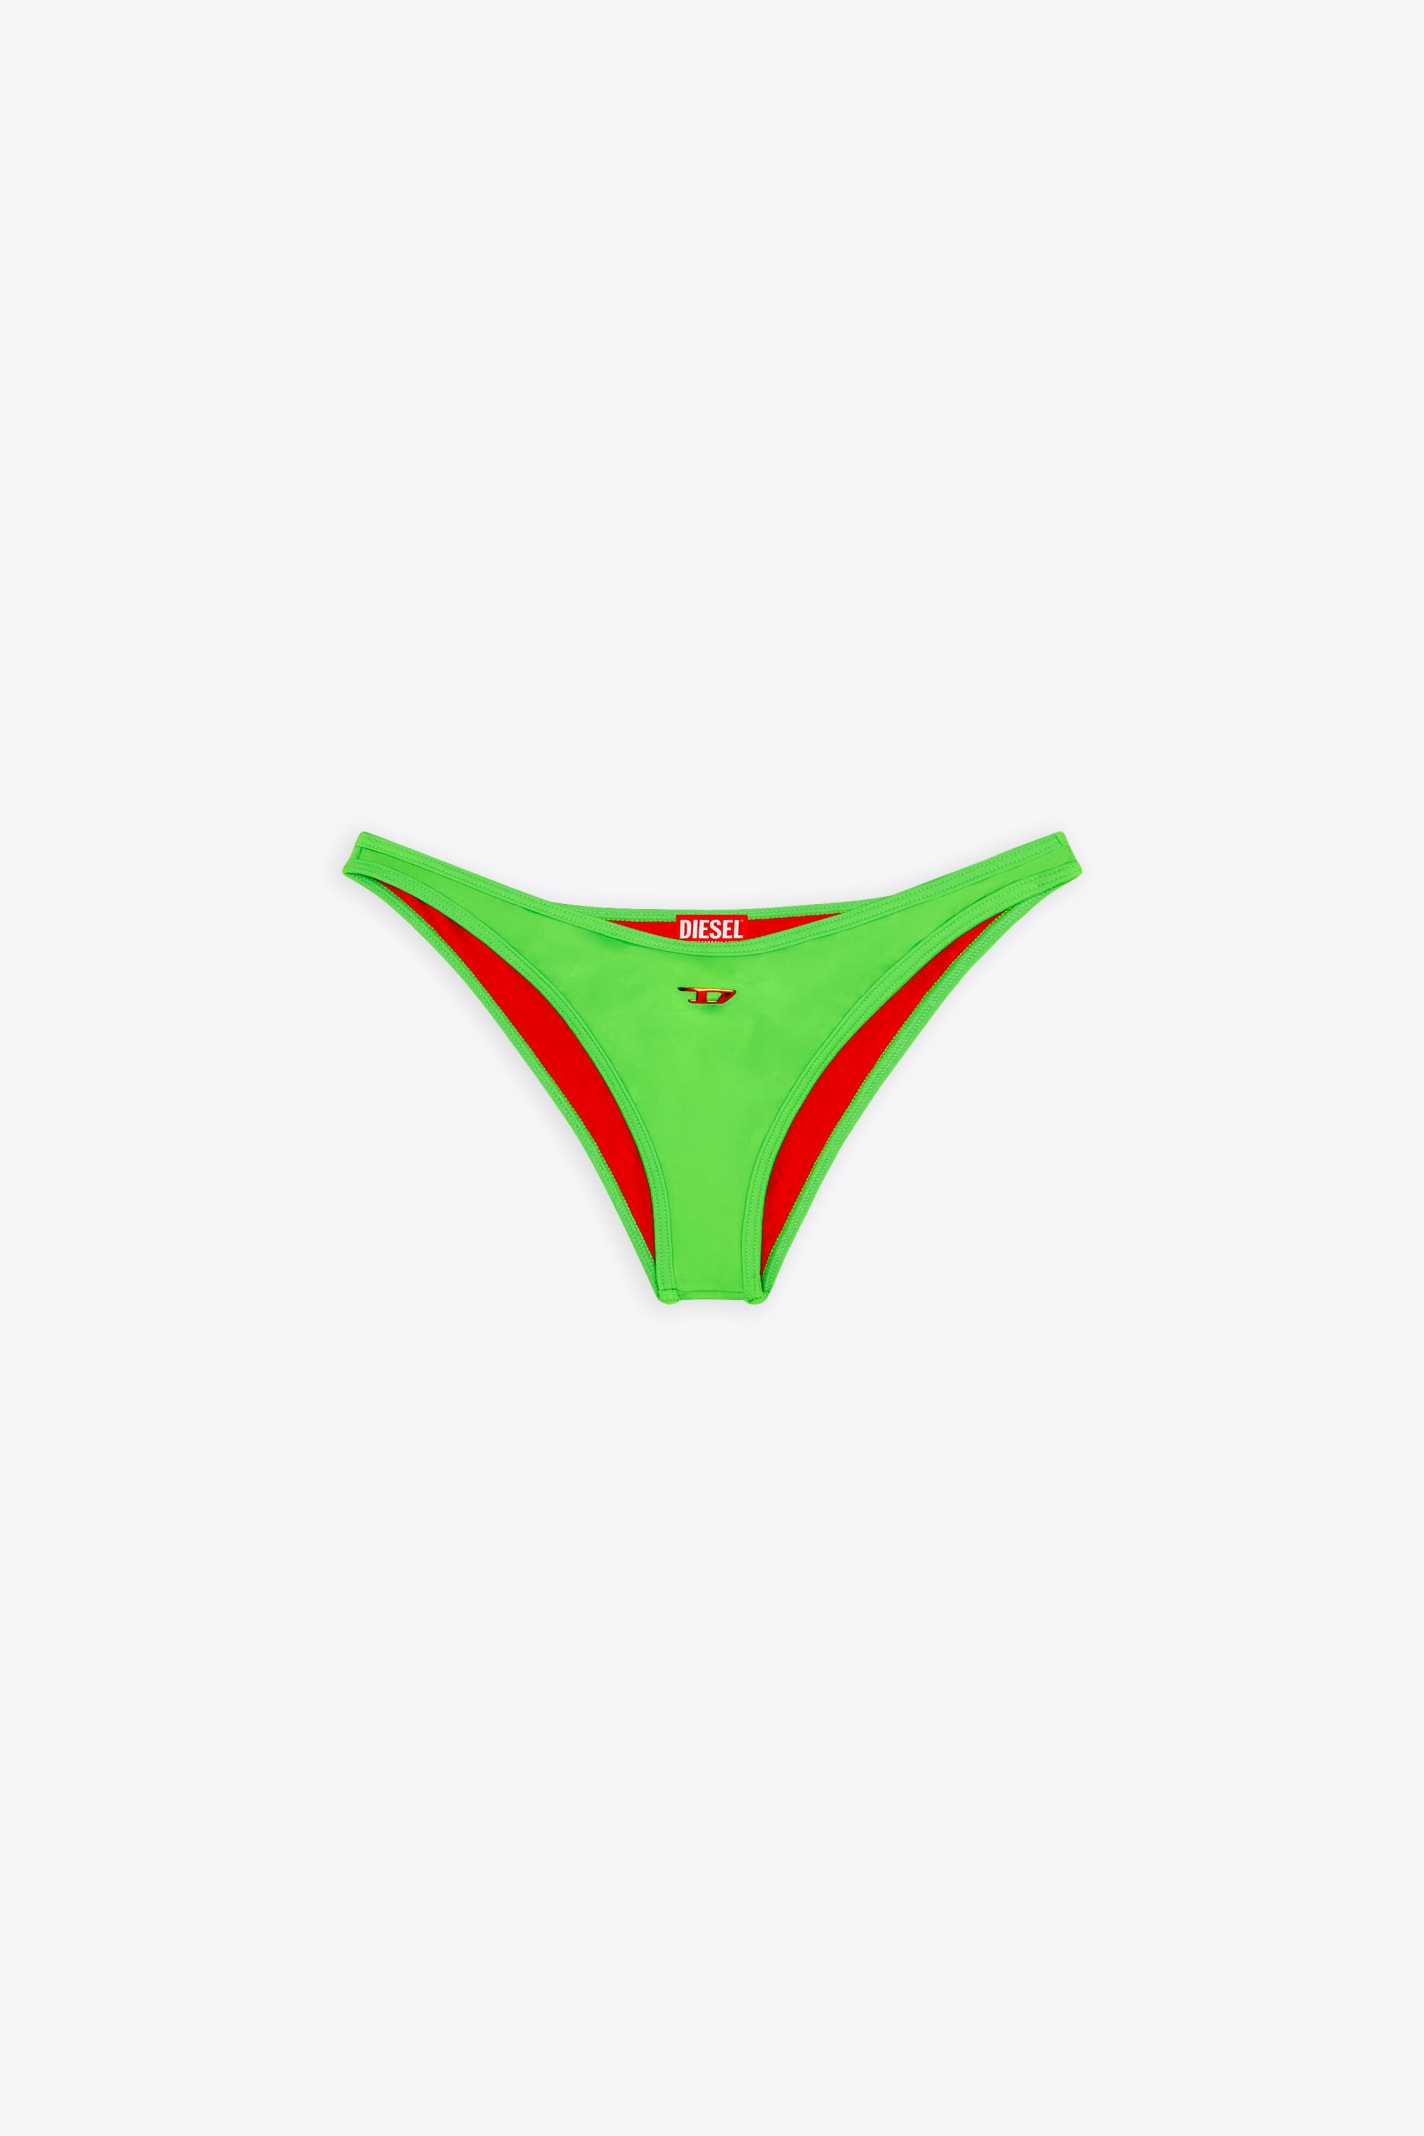 bfpn-punchy-x Swimsuit Bottom